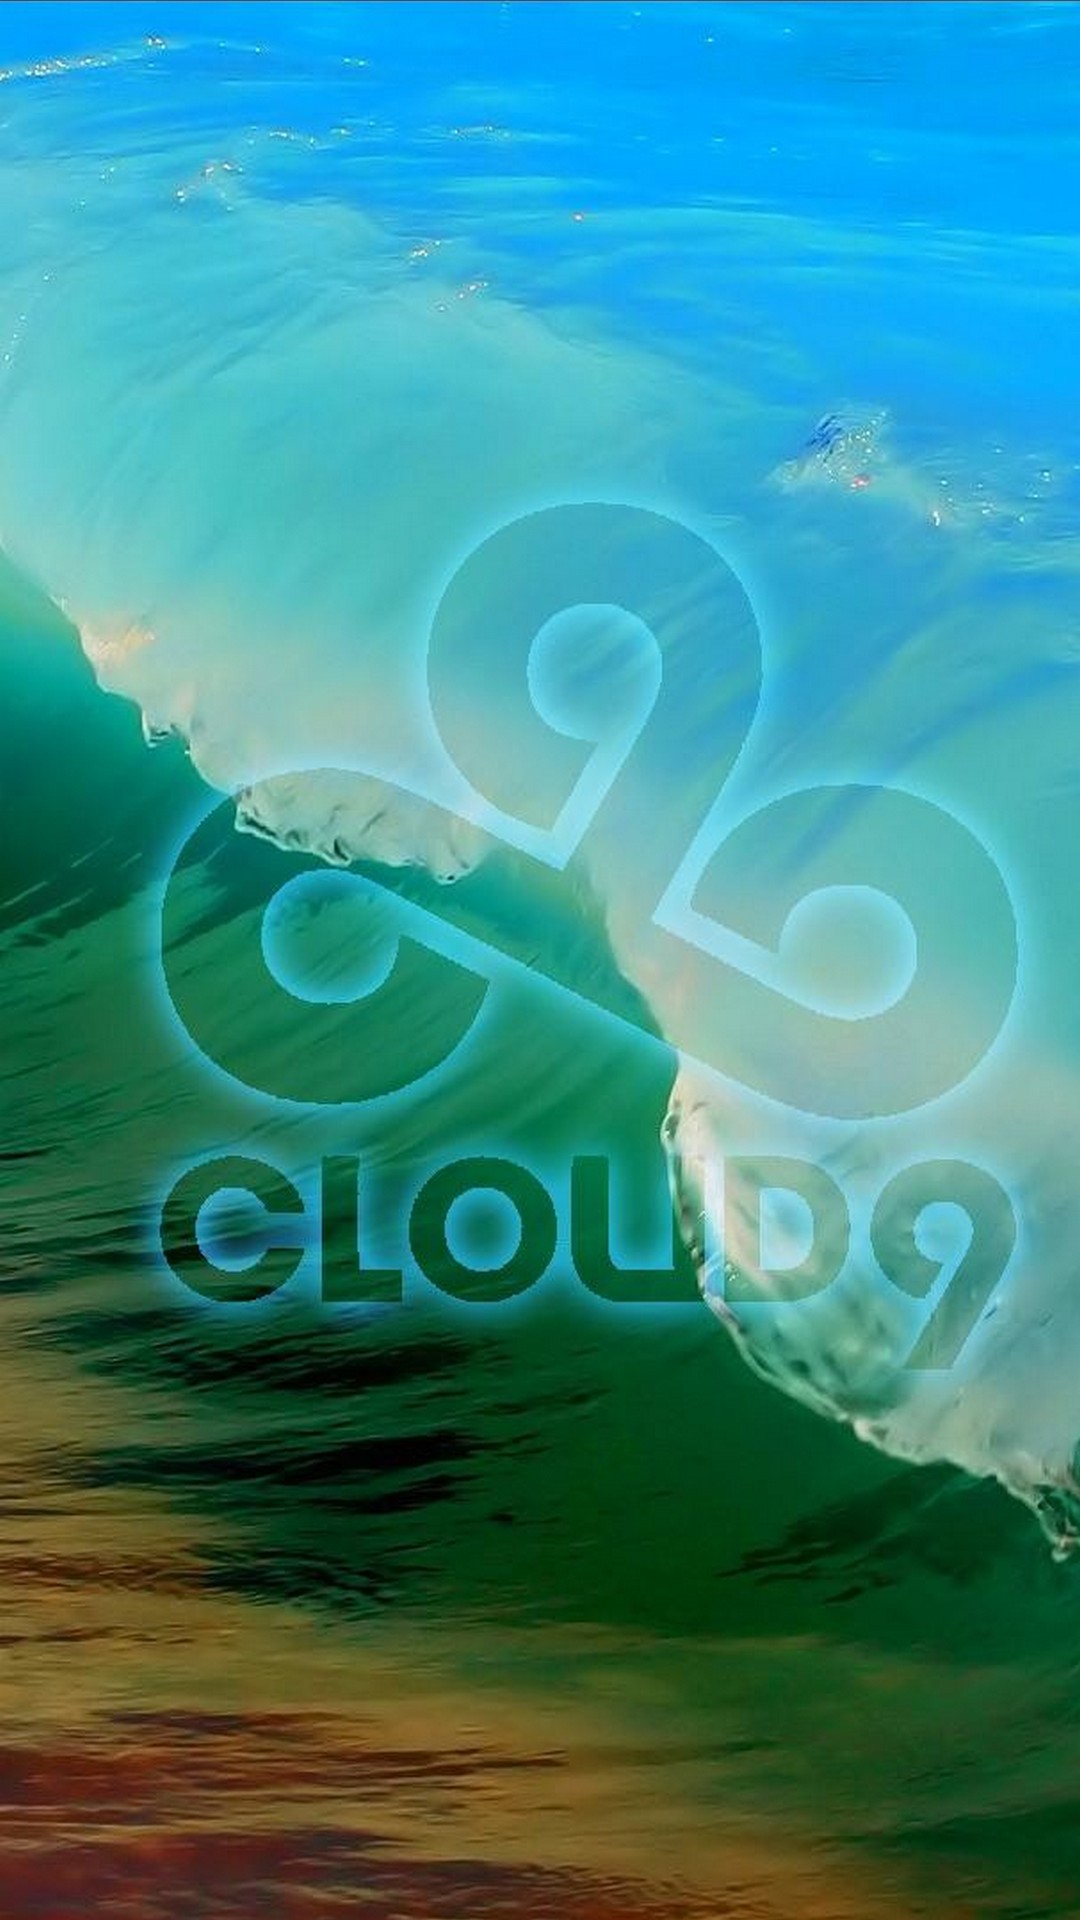 iPhone Wallpaper Cloud 9 Games resolution 1080x1920